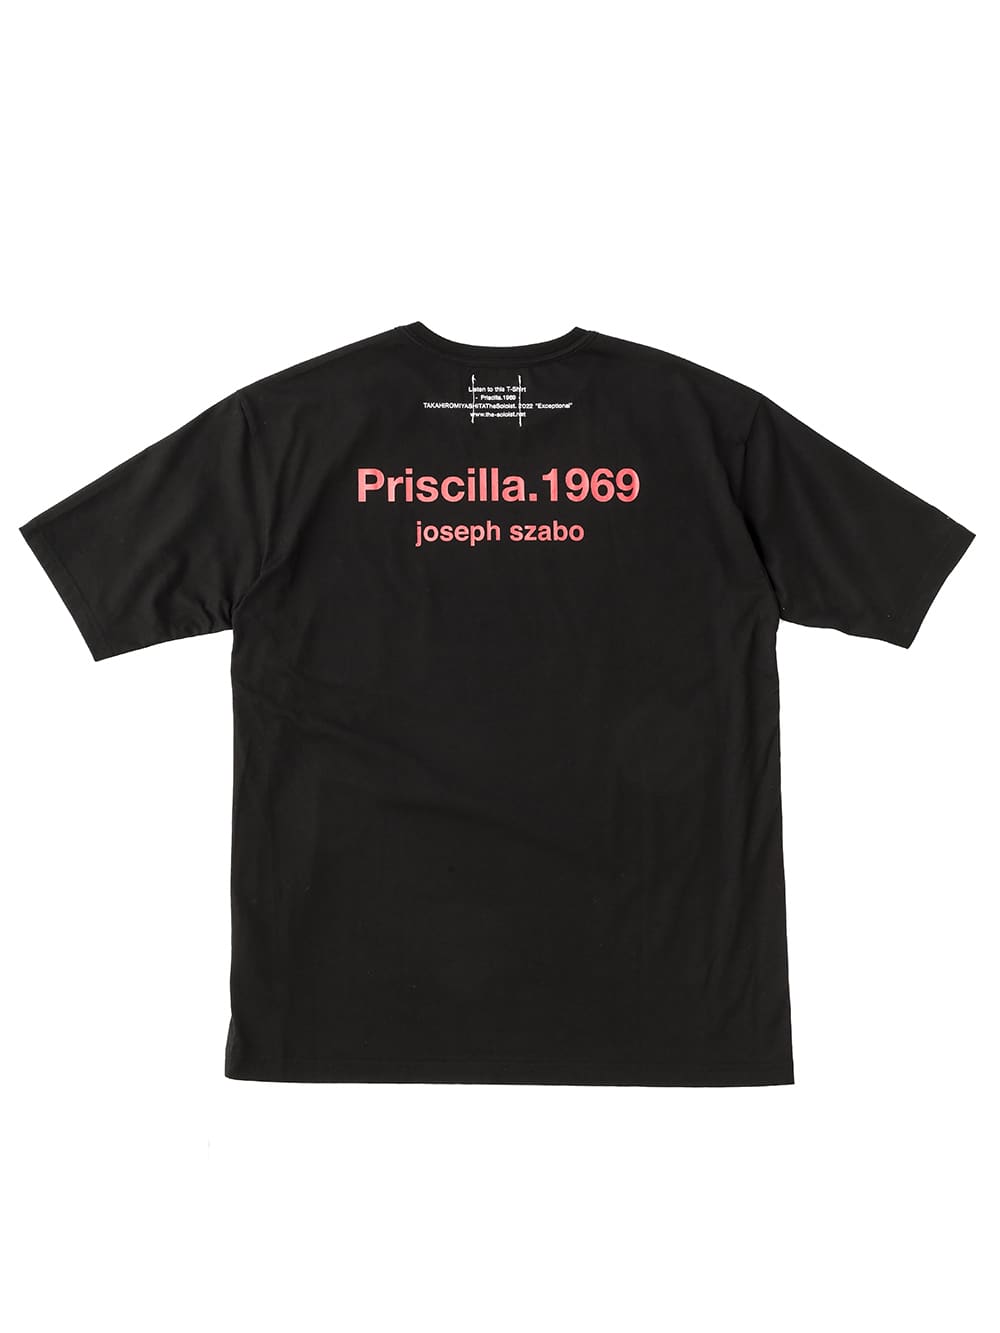 priscilla 1969. (oversized s/s pocket tee)